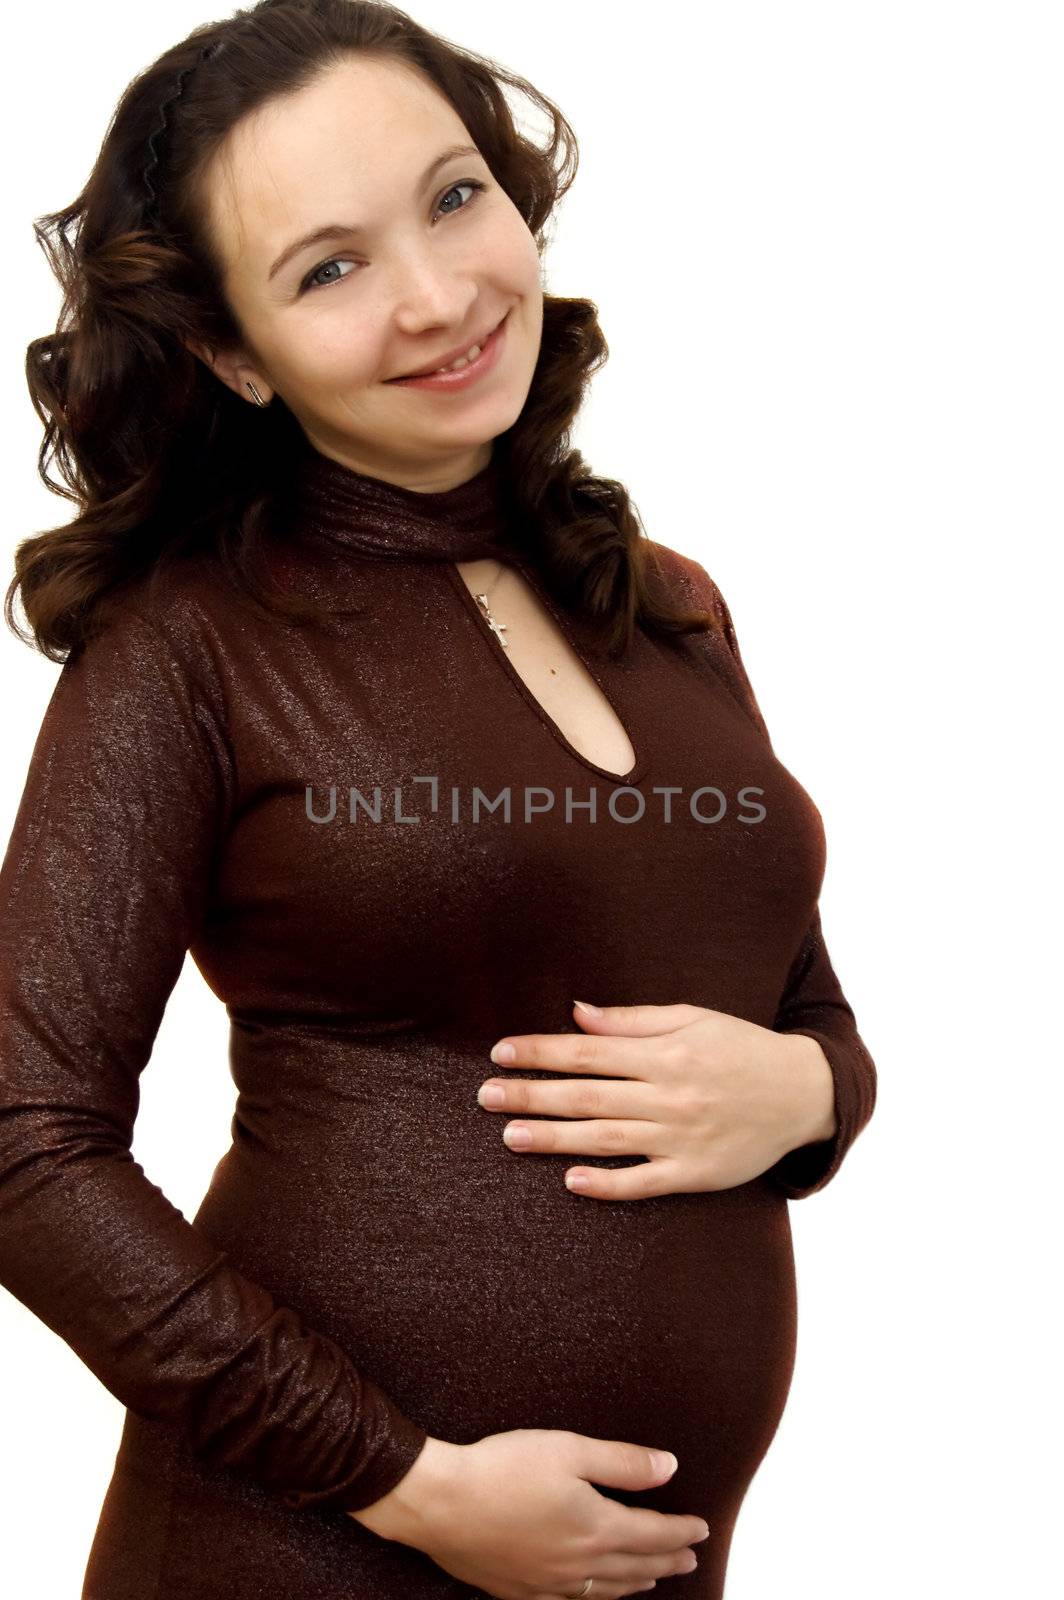 Smiling pregnant woman in elegant dress over white